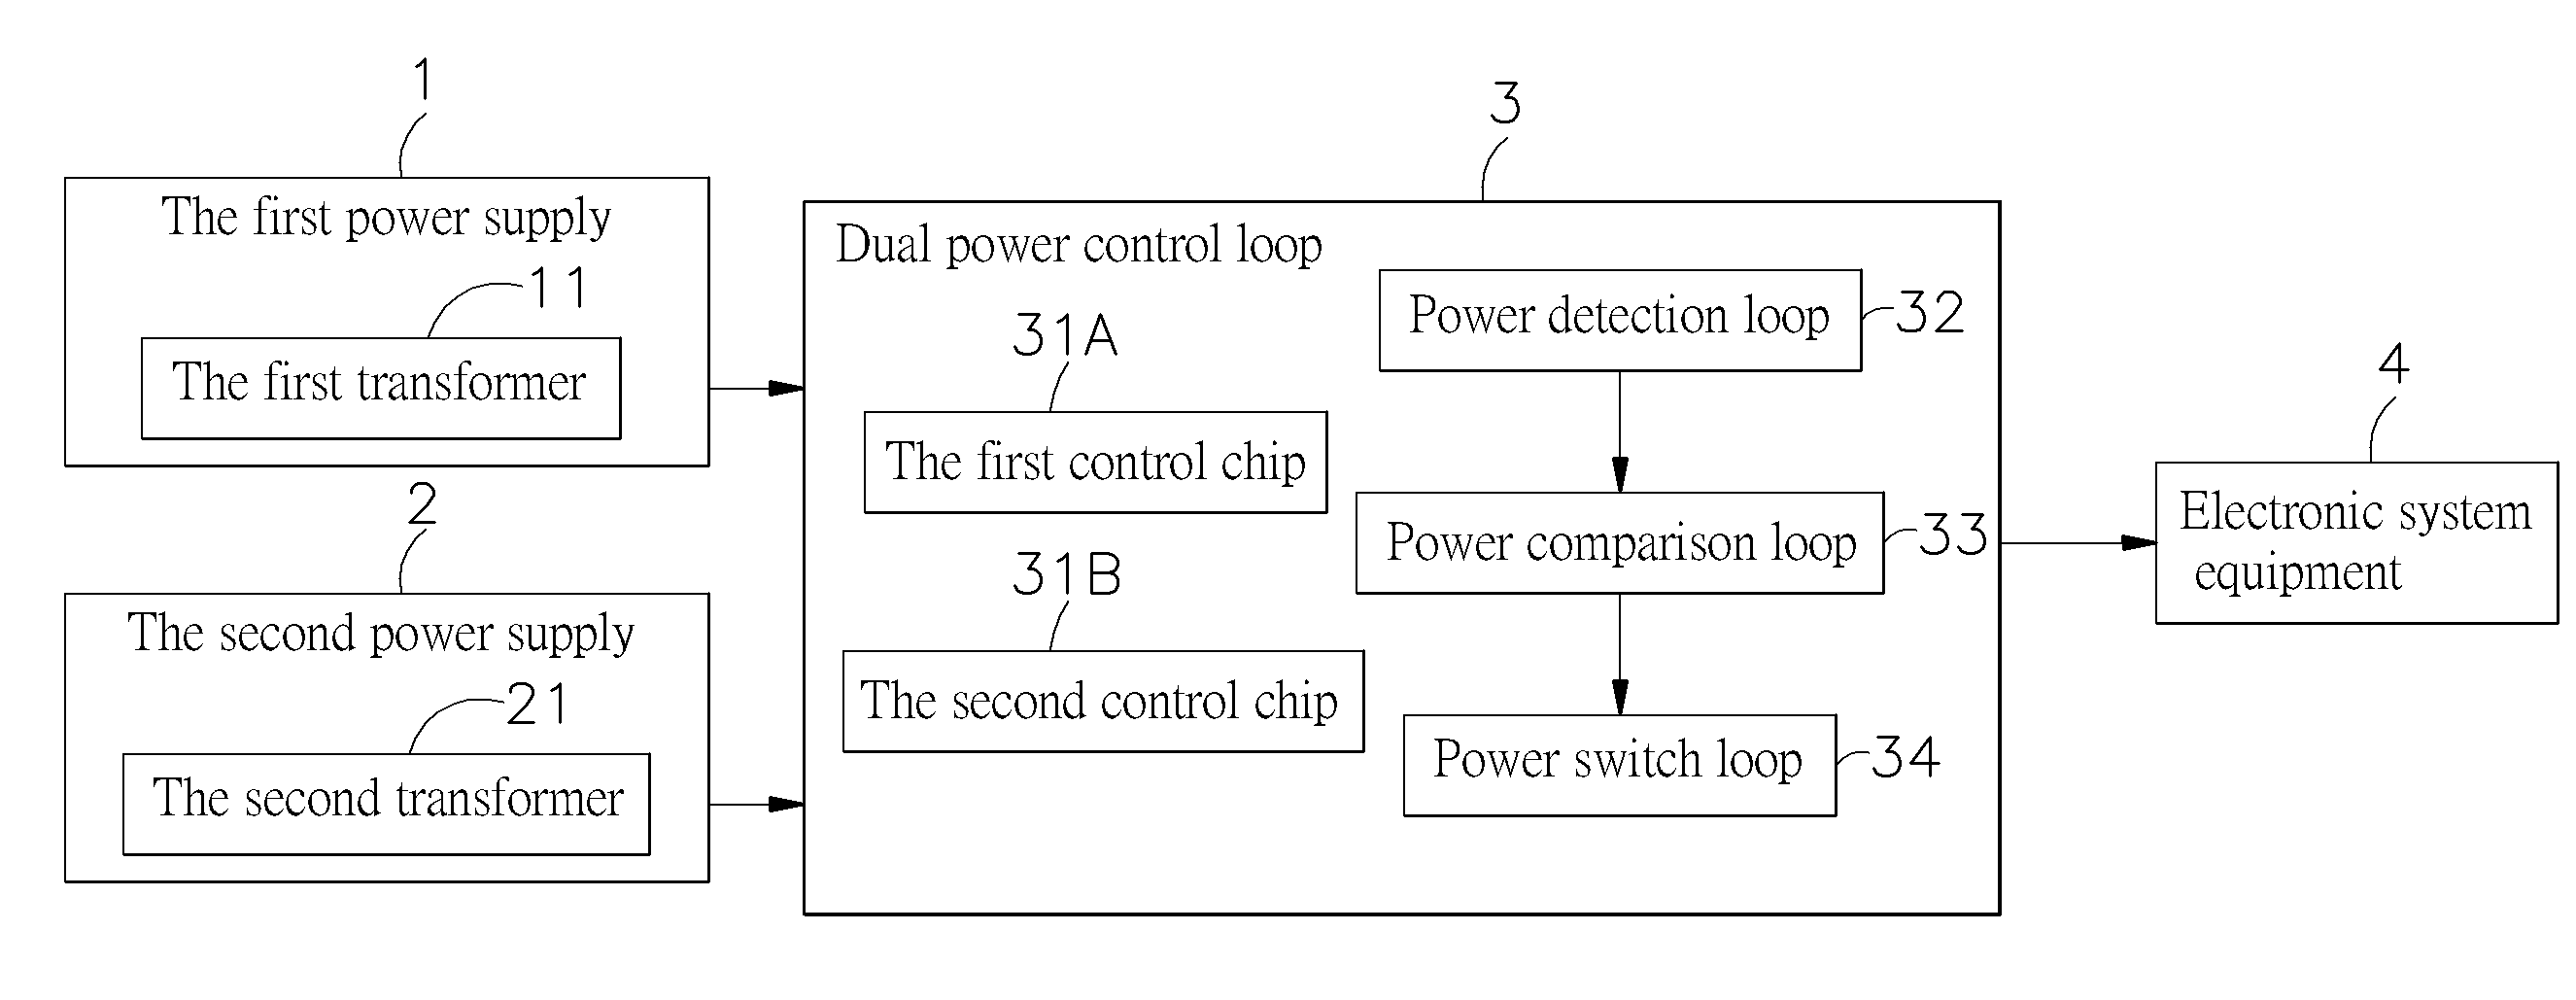 Low- voltage dual power loop device and method